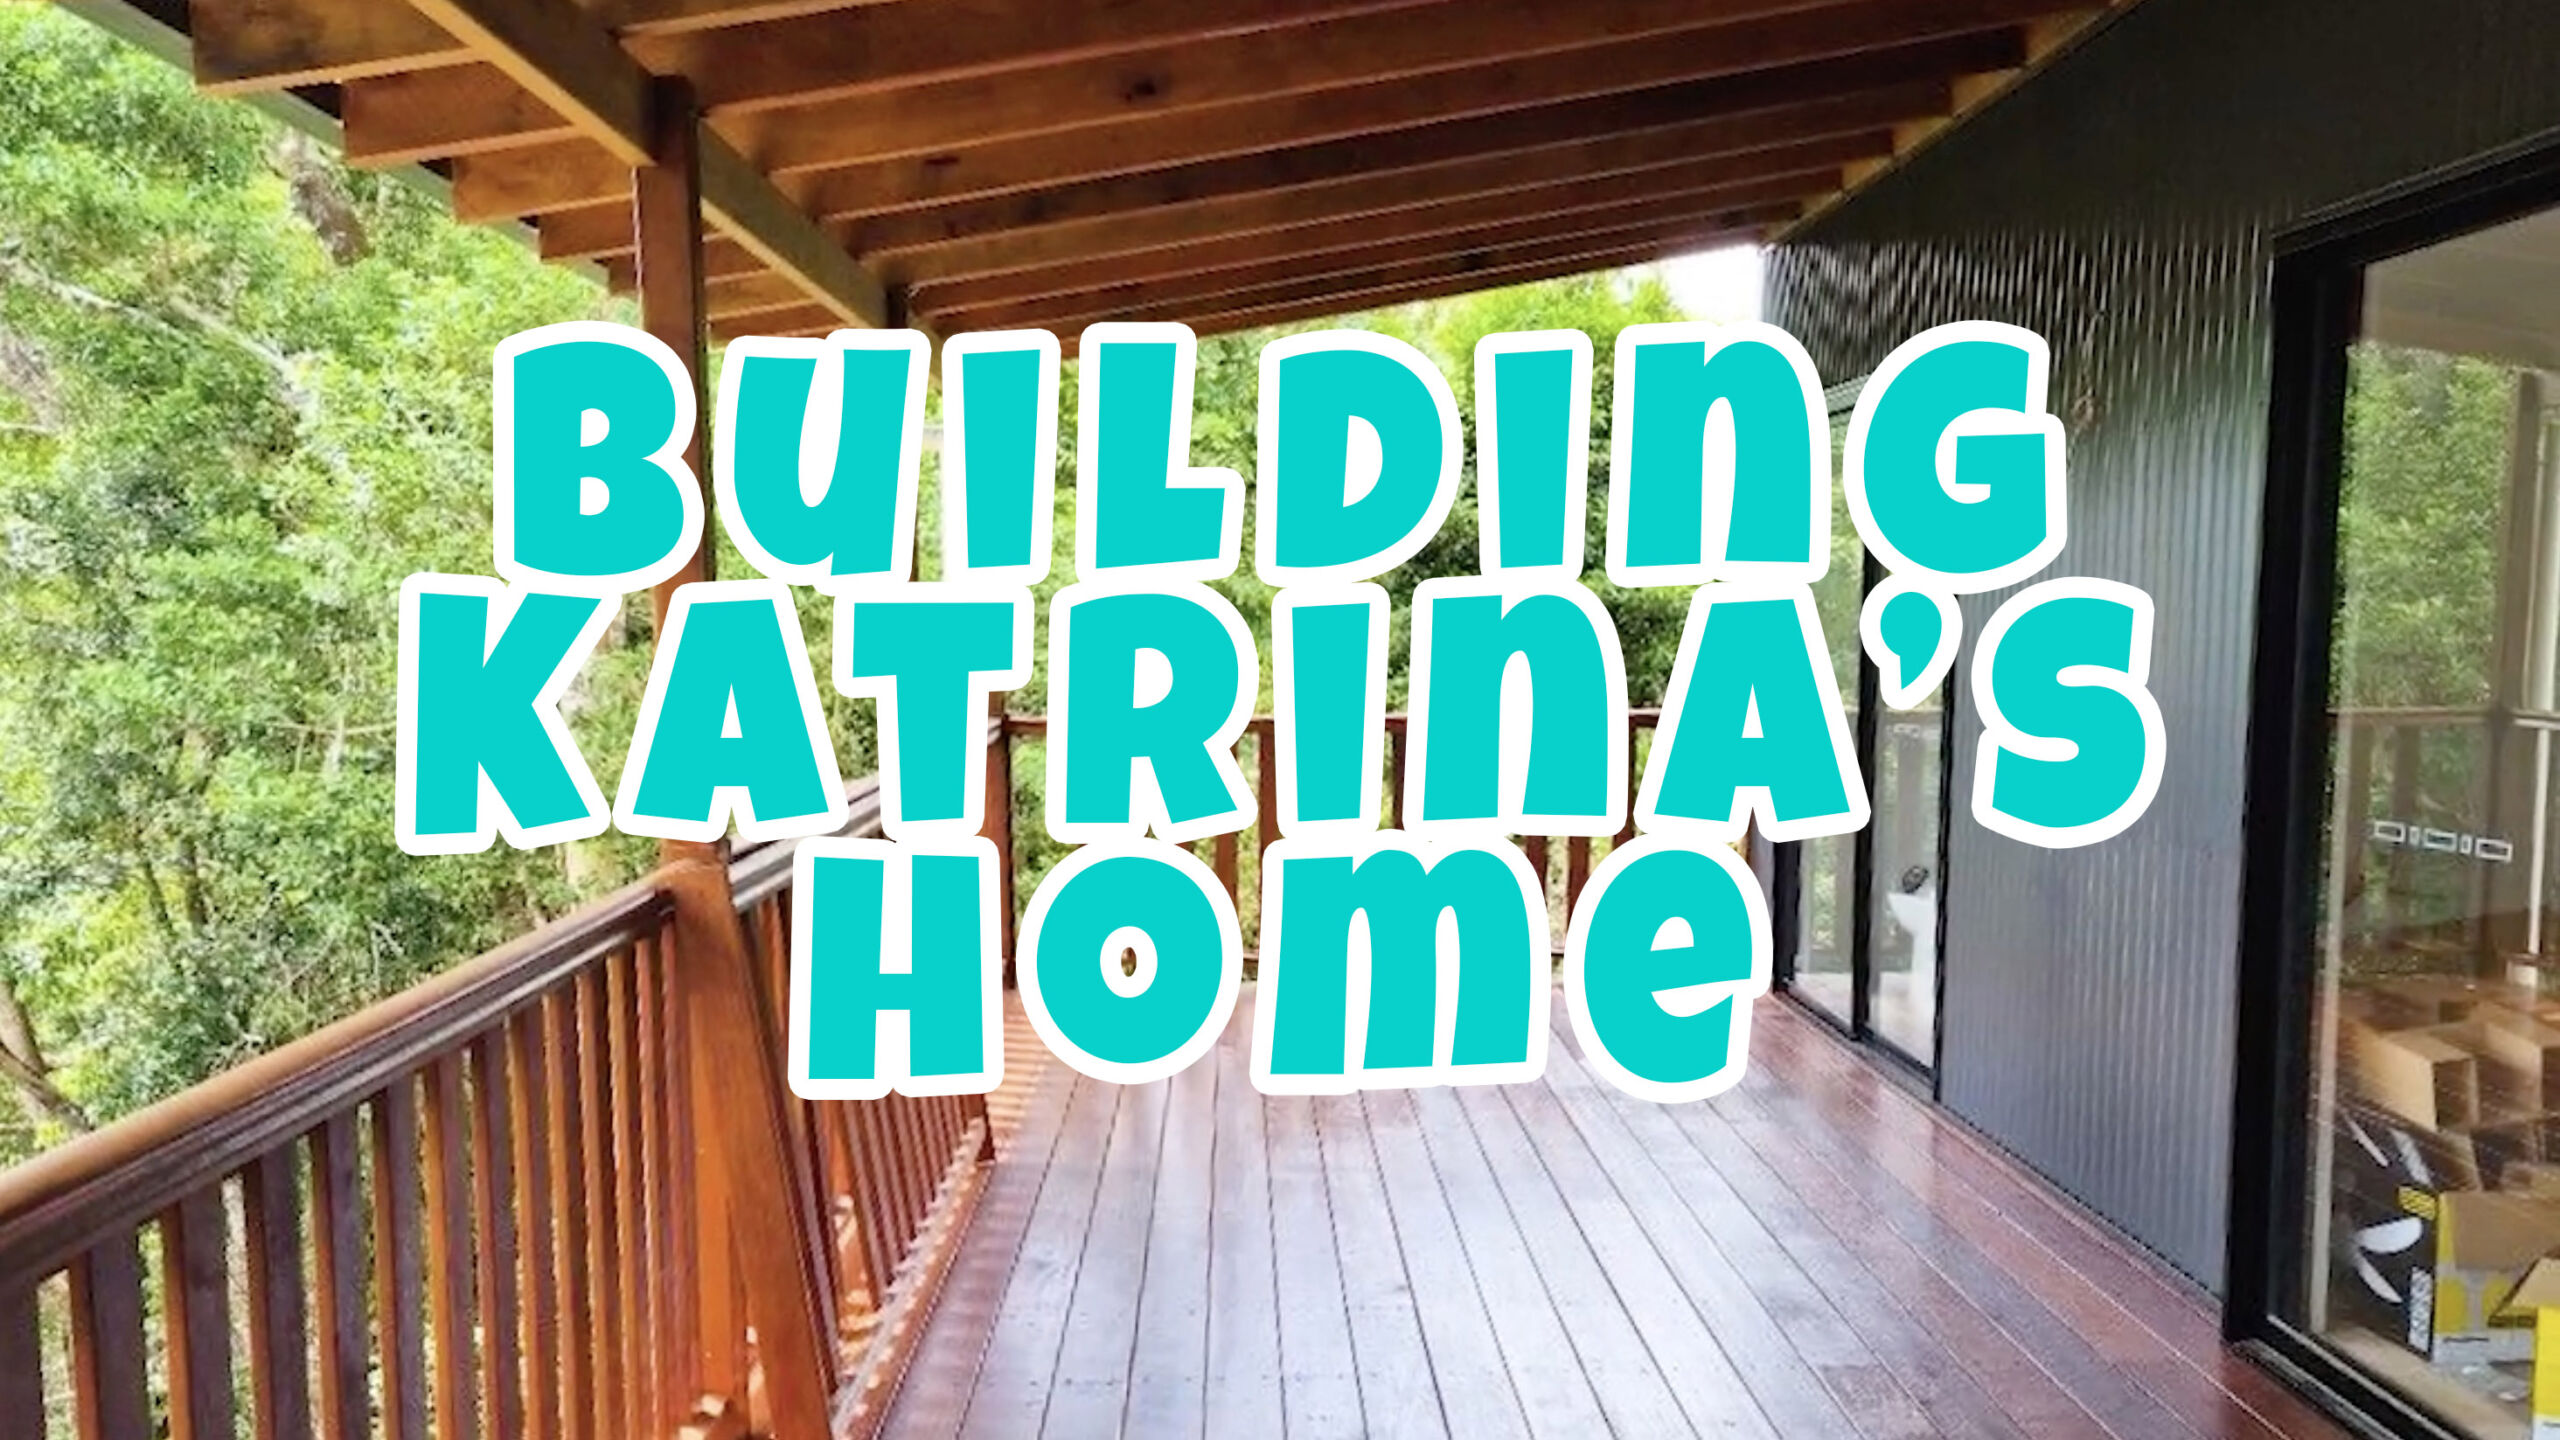 Watch Katrina's Video